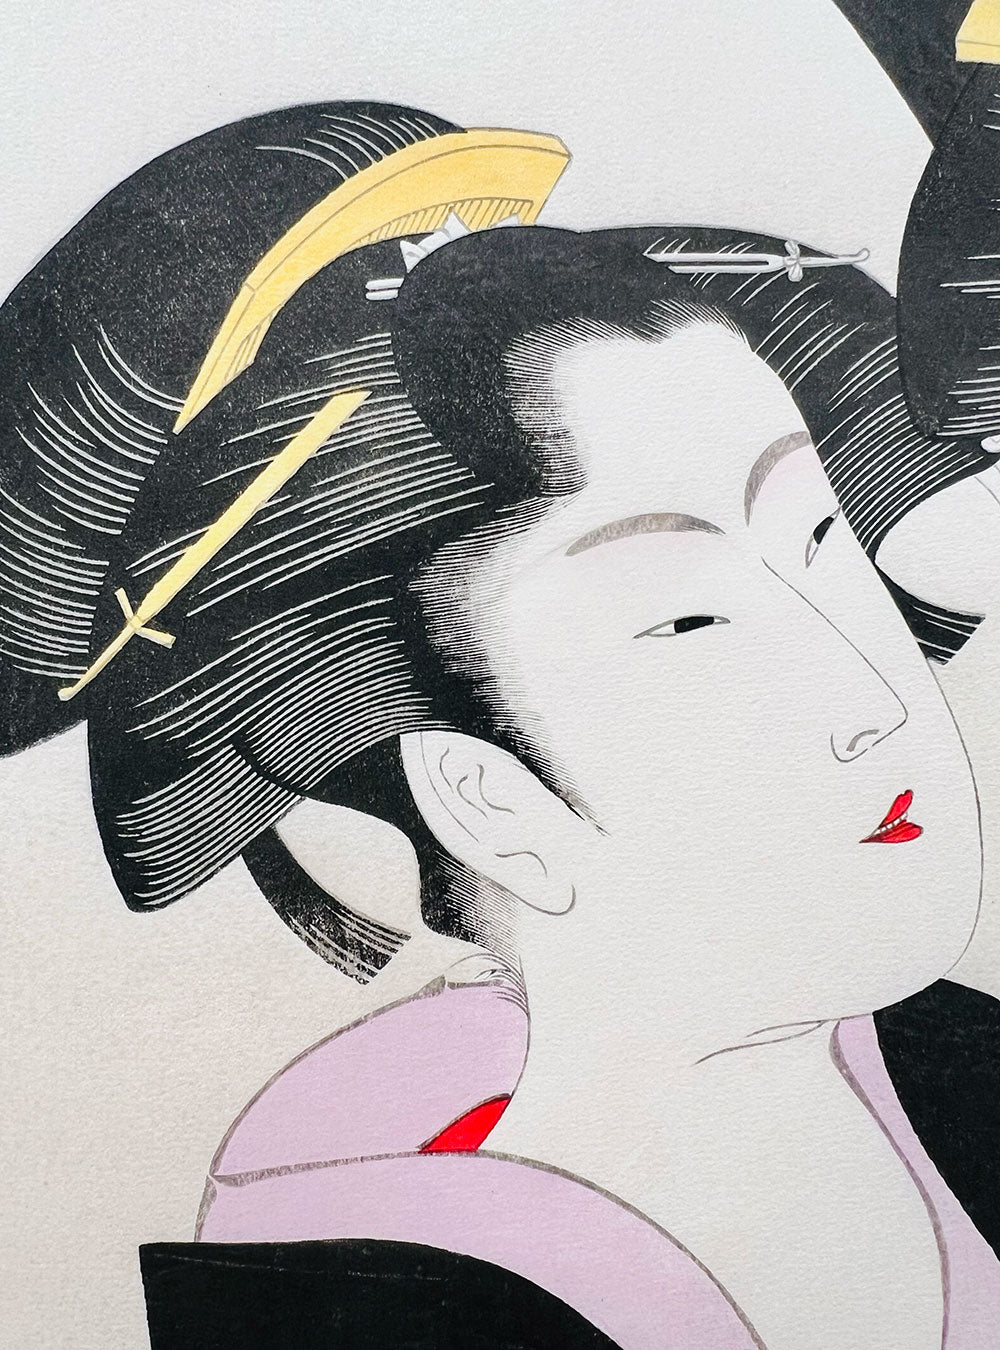 Woodblock print "Seven Women Applying Make-up Using a Mirror" by Utamaro published by Uchida art